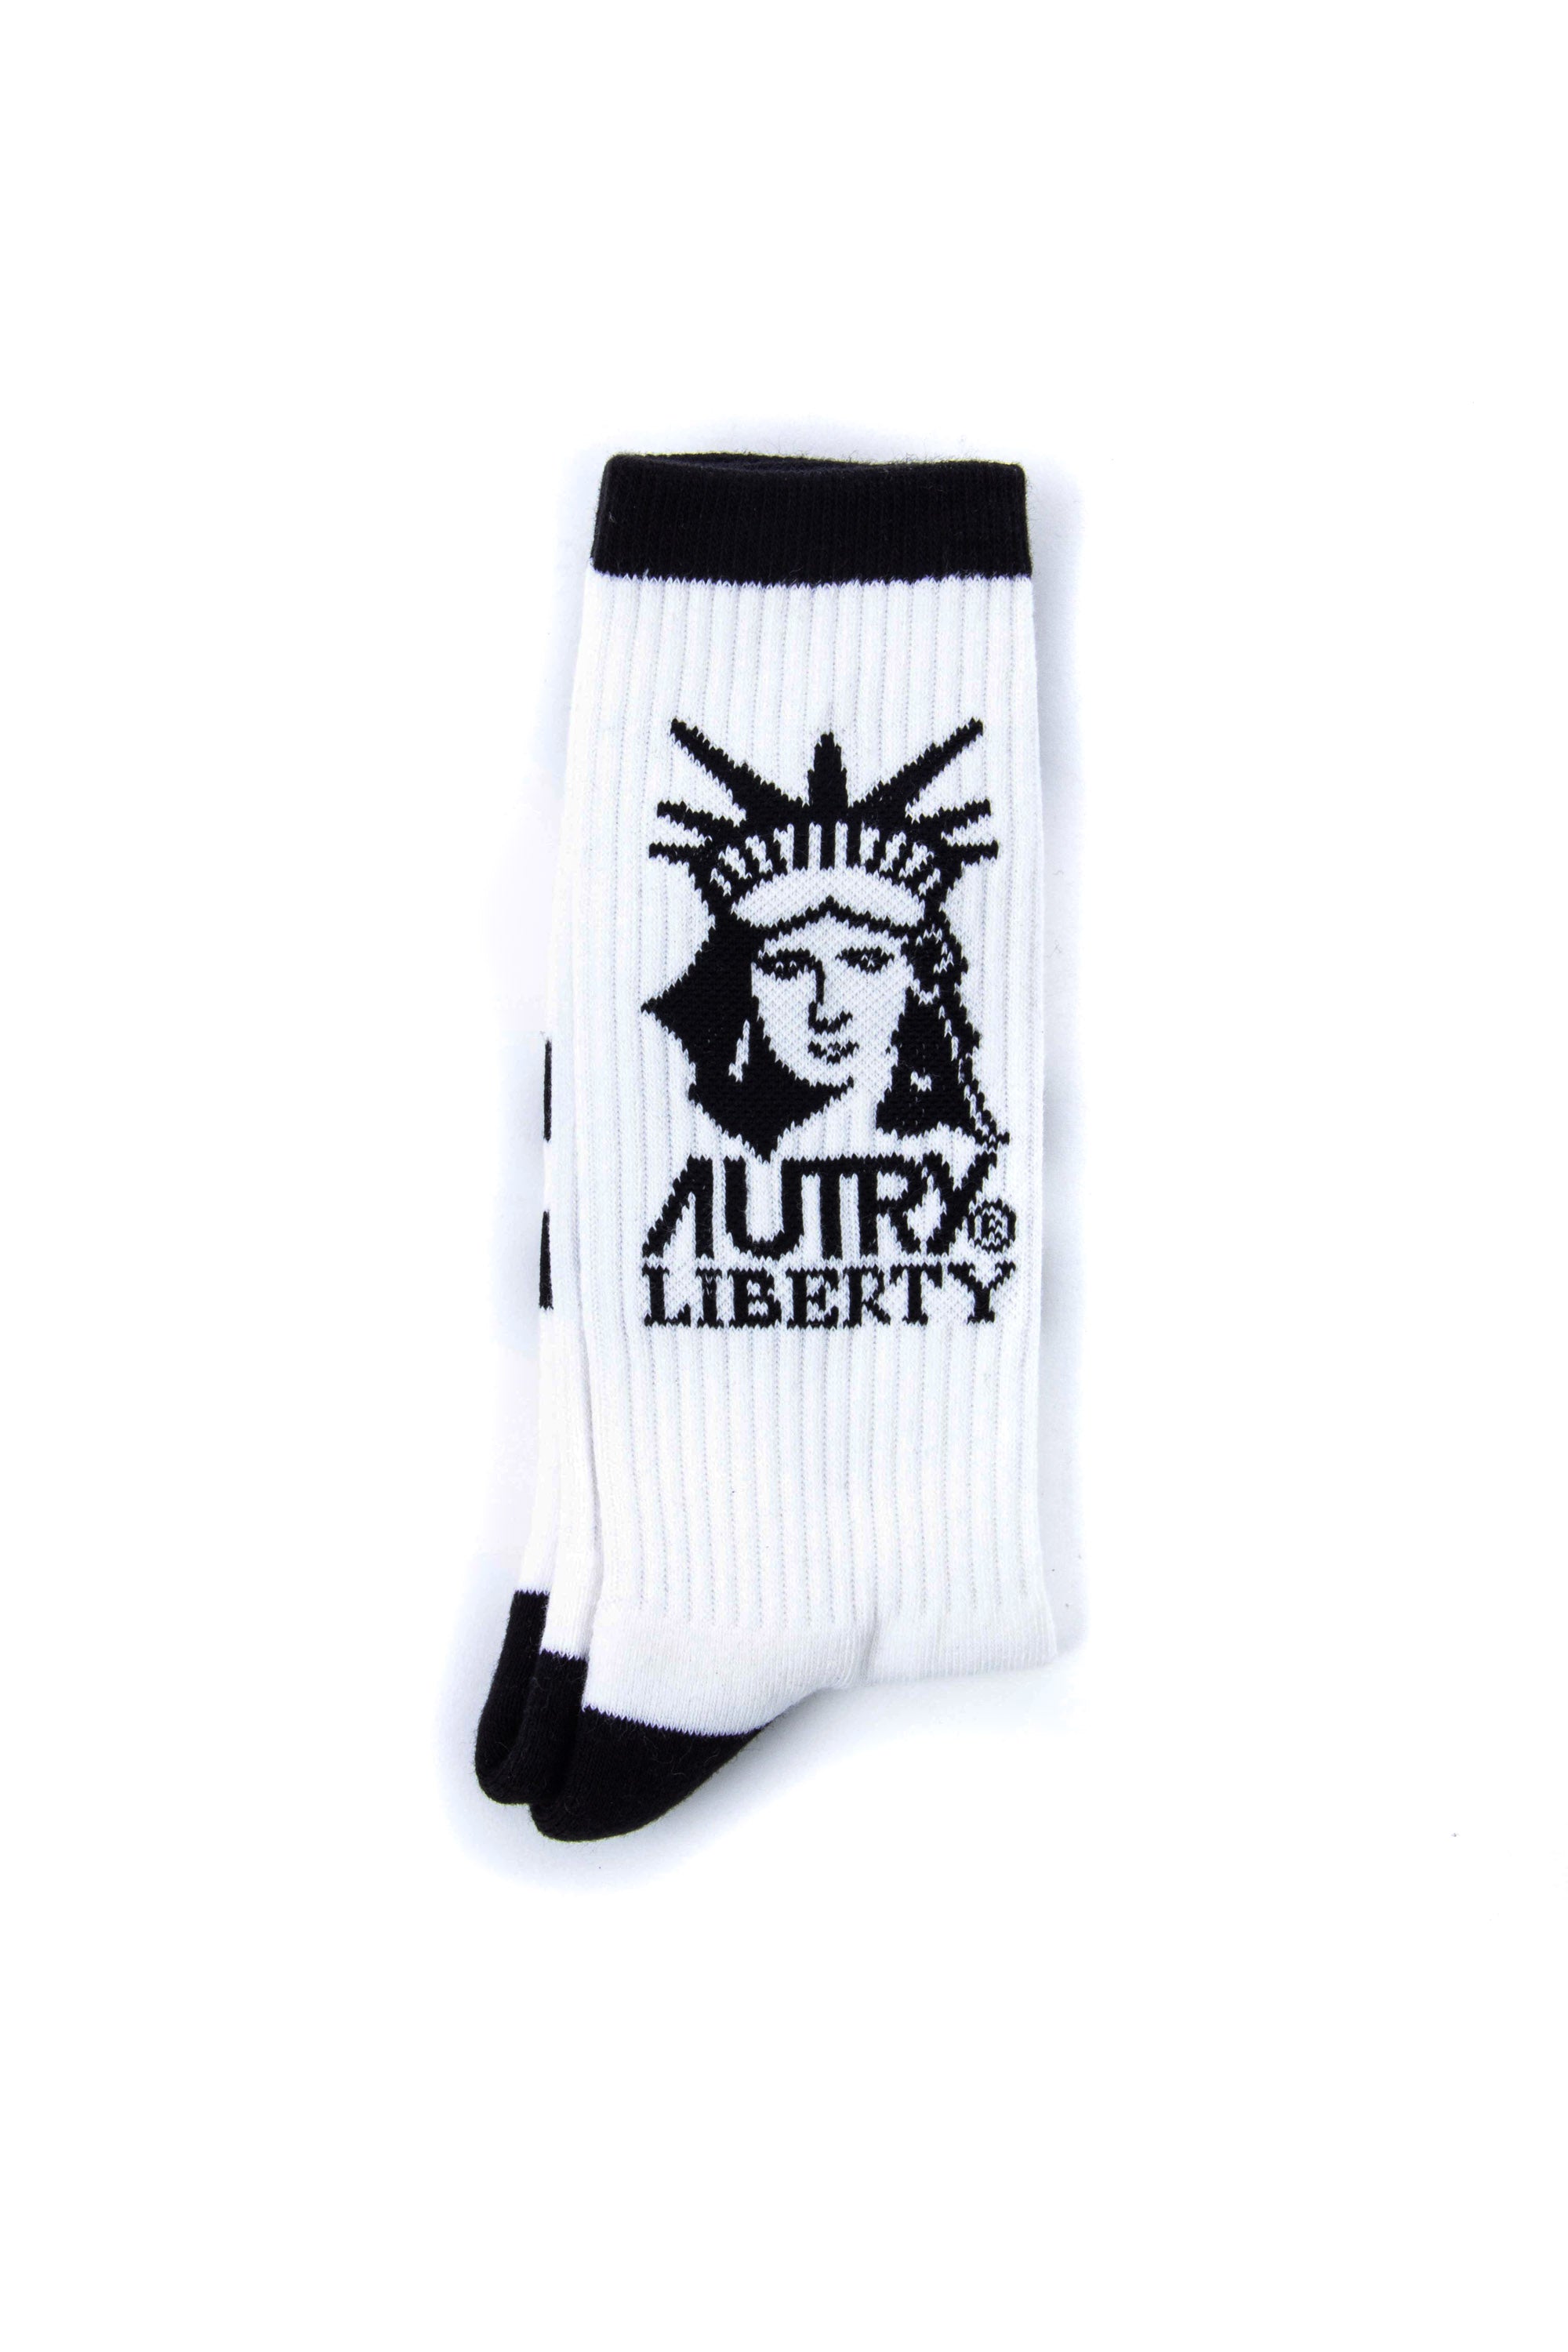 "Statue of Liberty" cotton sock